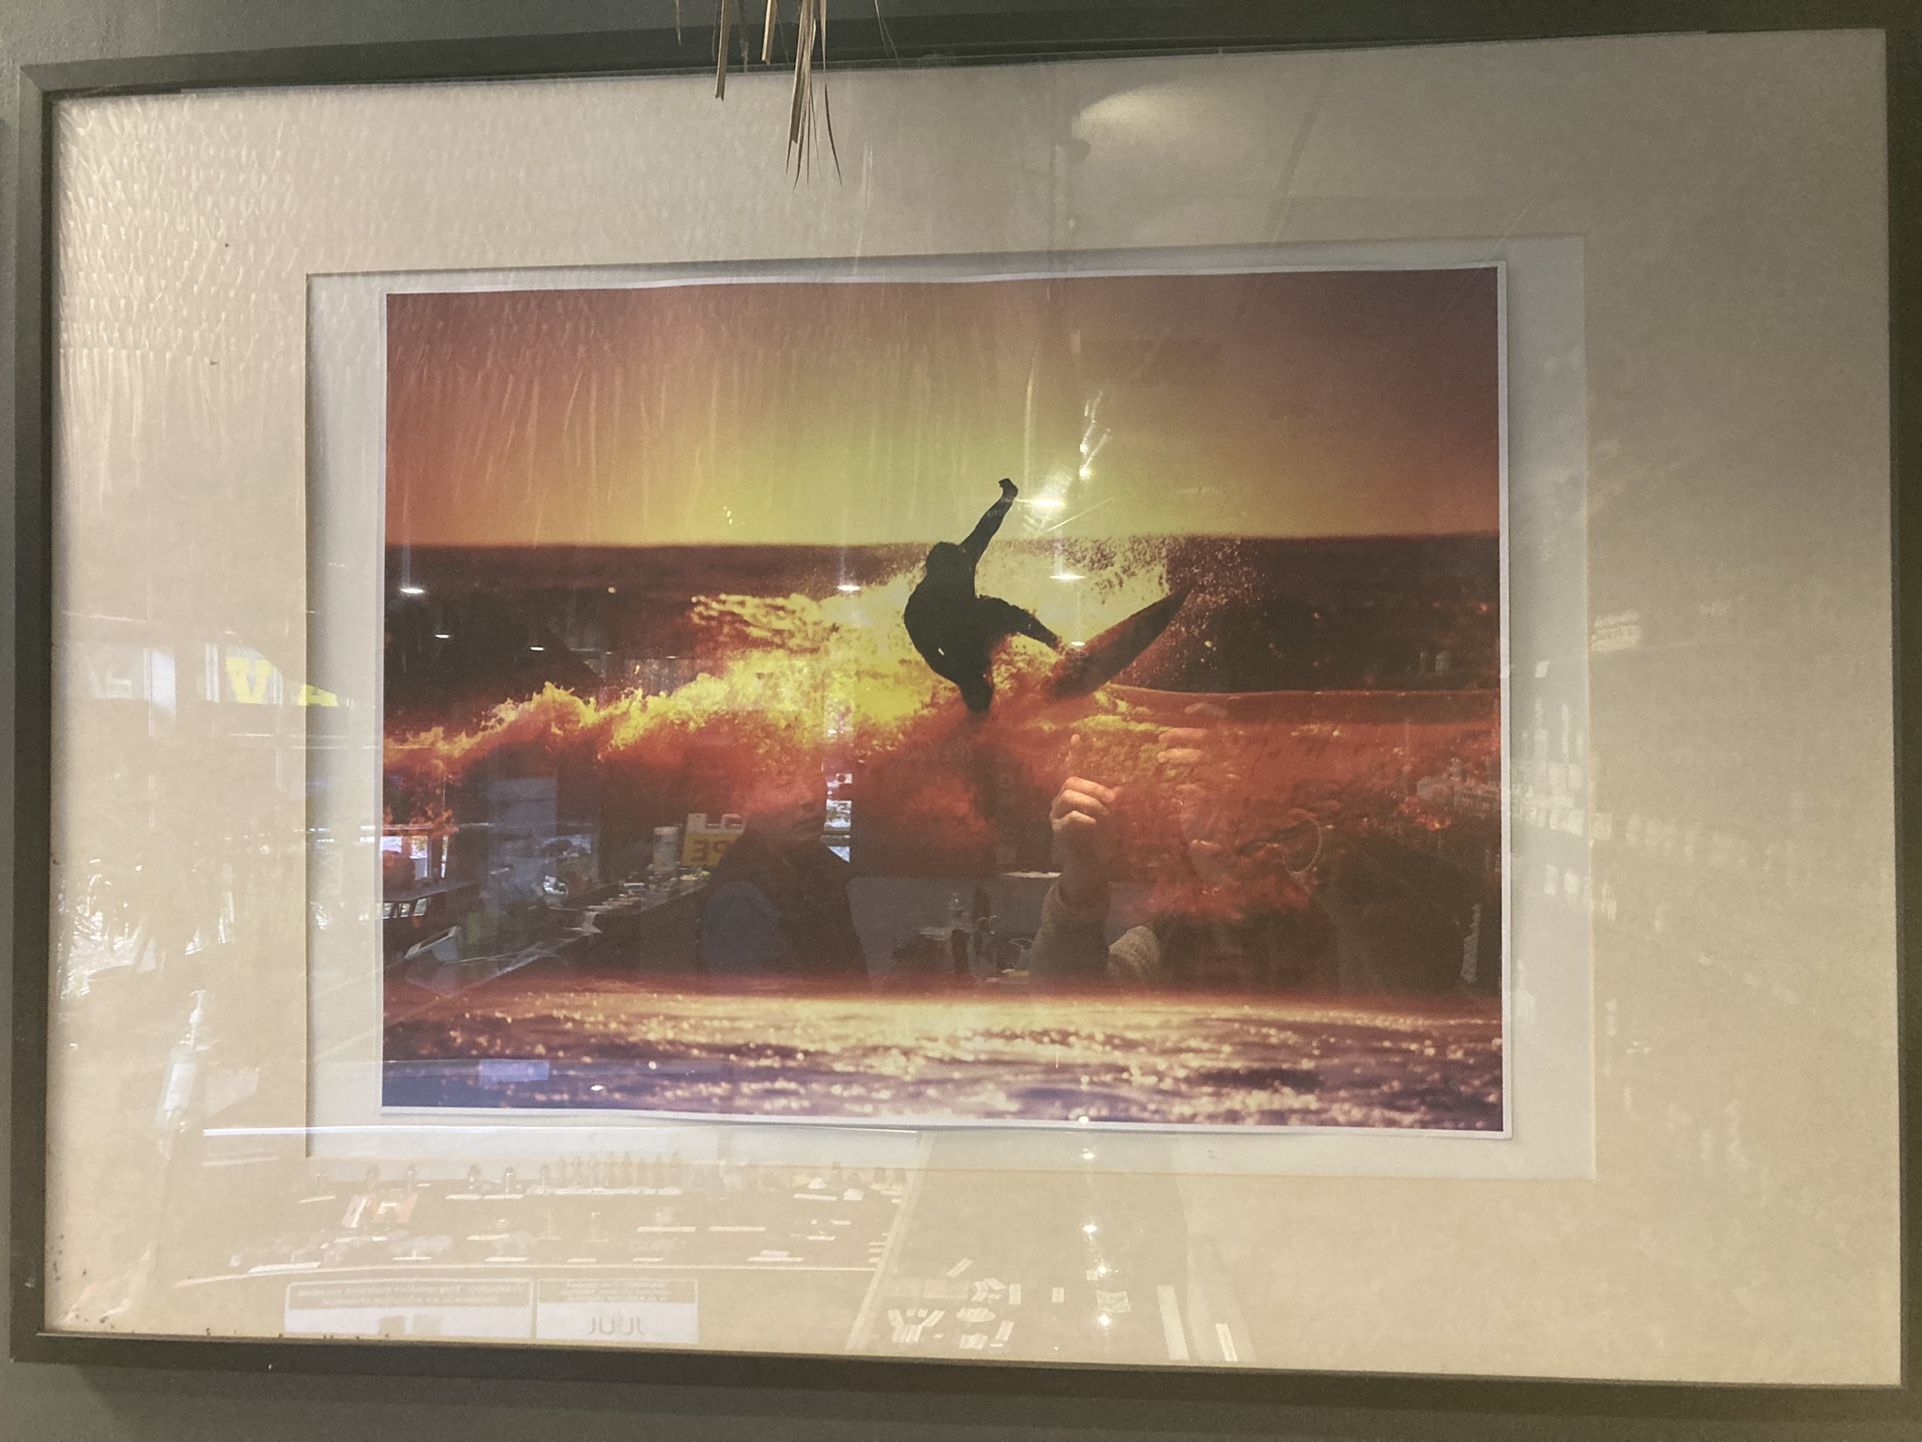 Framed Print of Surfer